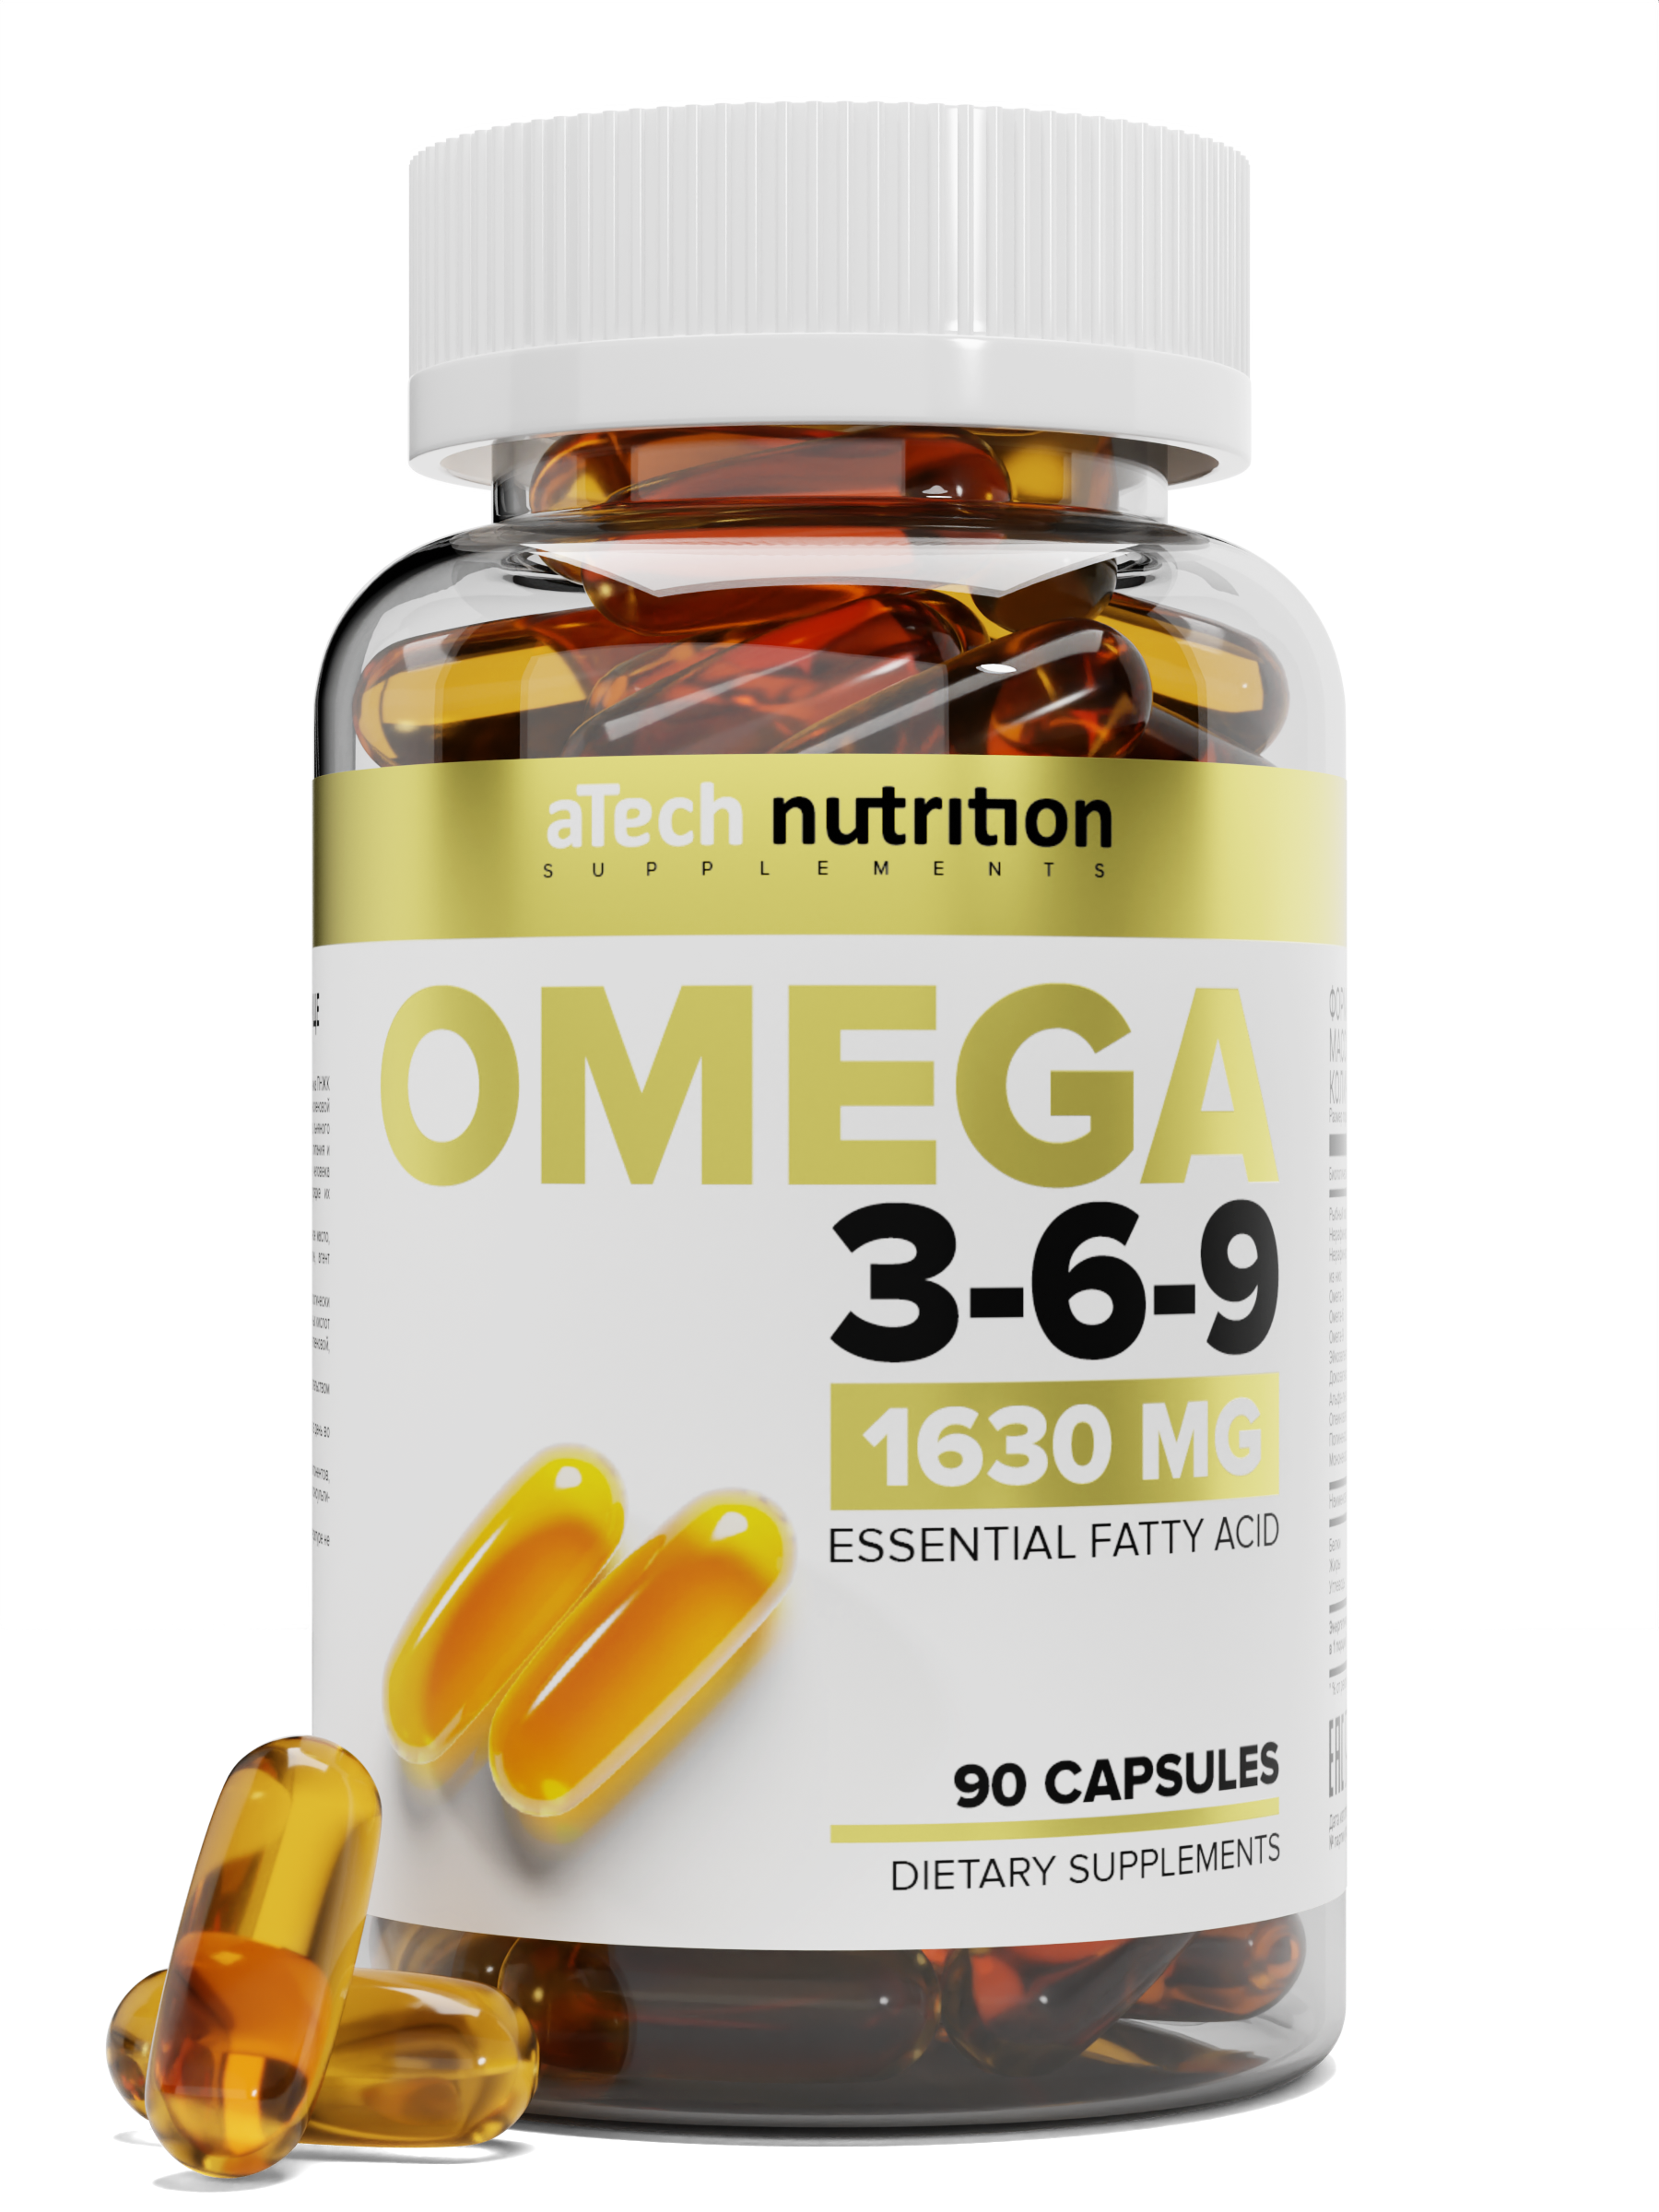 Купить OMEGA 3-6-9 1630 мг, Омега 3-6-9 aTech nutrition рыбий жир, 1630 мг 90 + 90 капсул